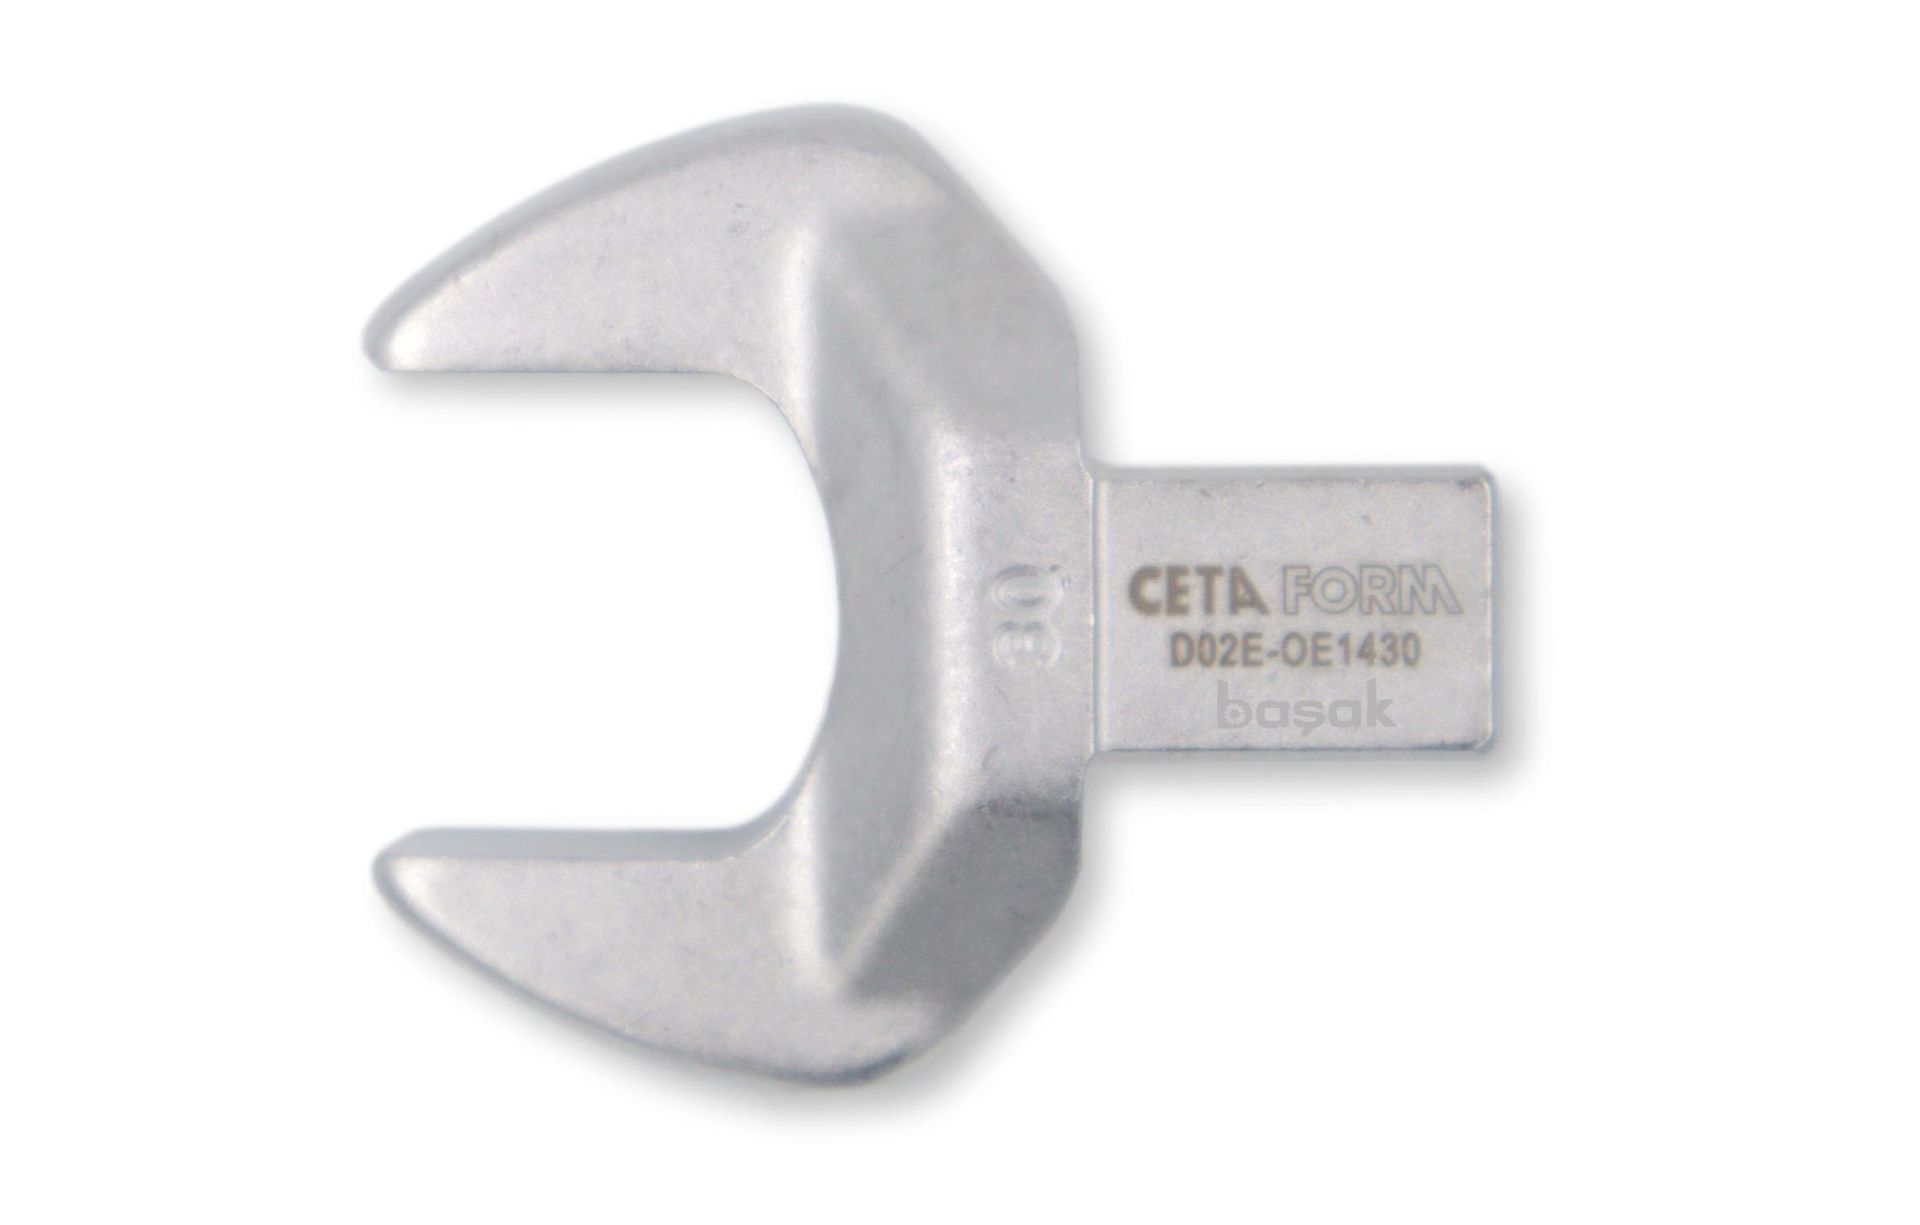 Ceta Form 30mm Açık Ağız Tork Anahtar Ucu (14x18mm) D02E-OE1430